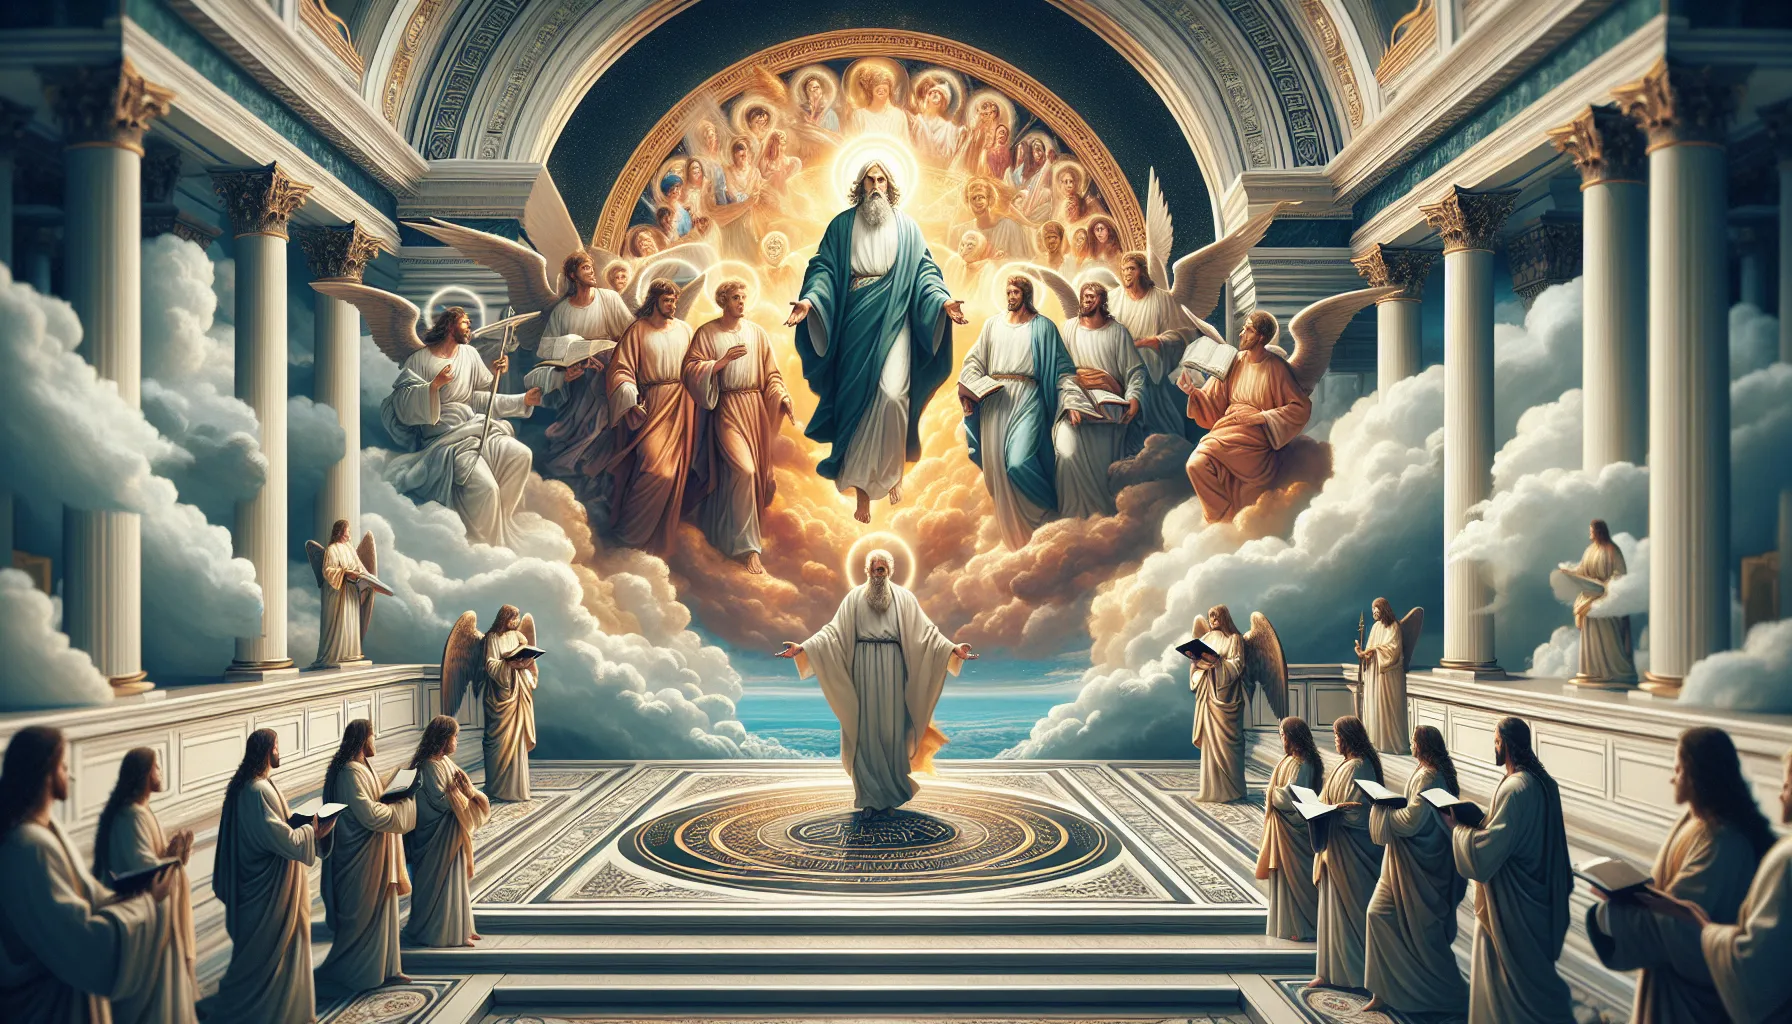 Imagen representativa del concepto del Tribunal de Cristo